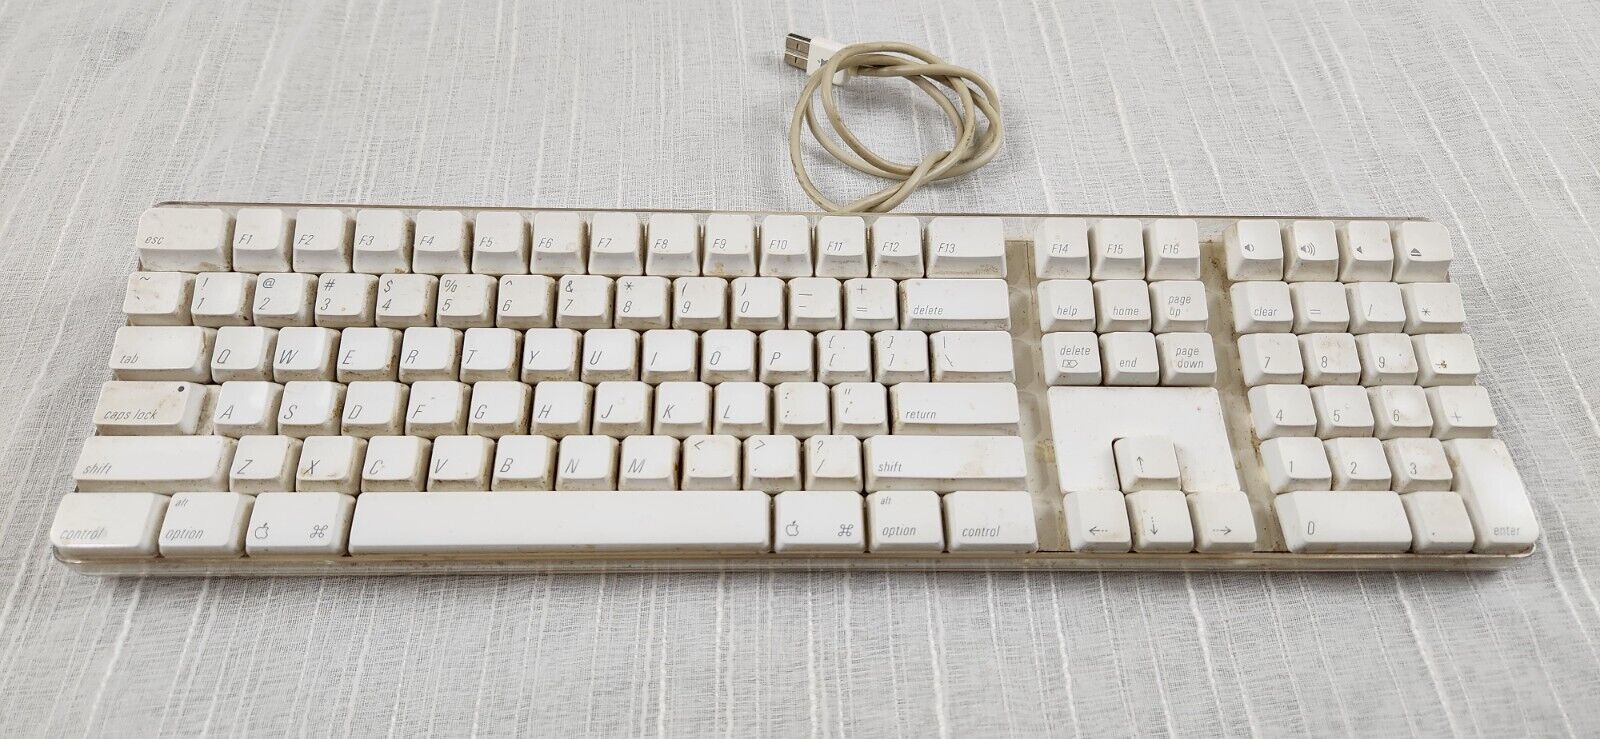 Apple Keyboard Model A1048 USB Connection White Vintage Keyboard